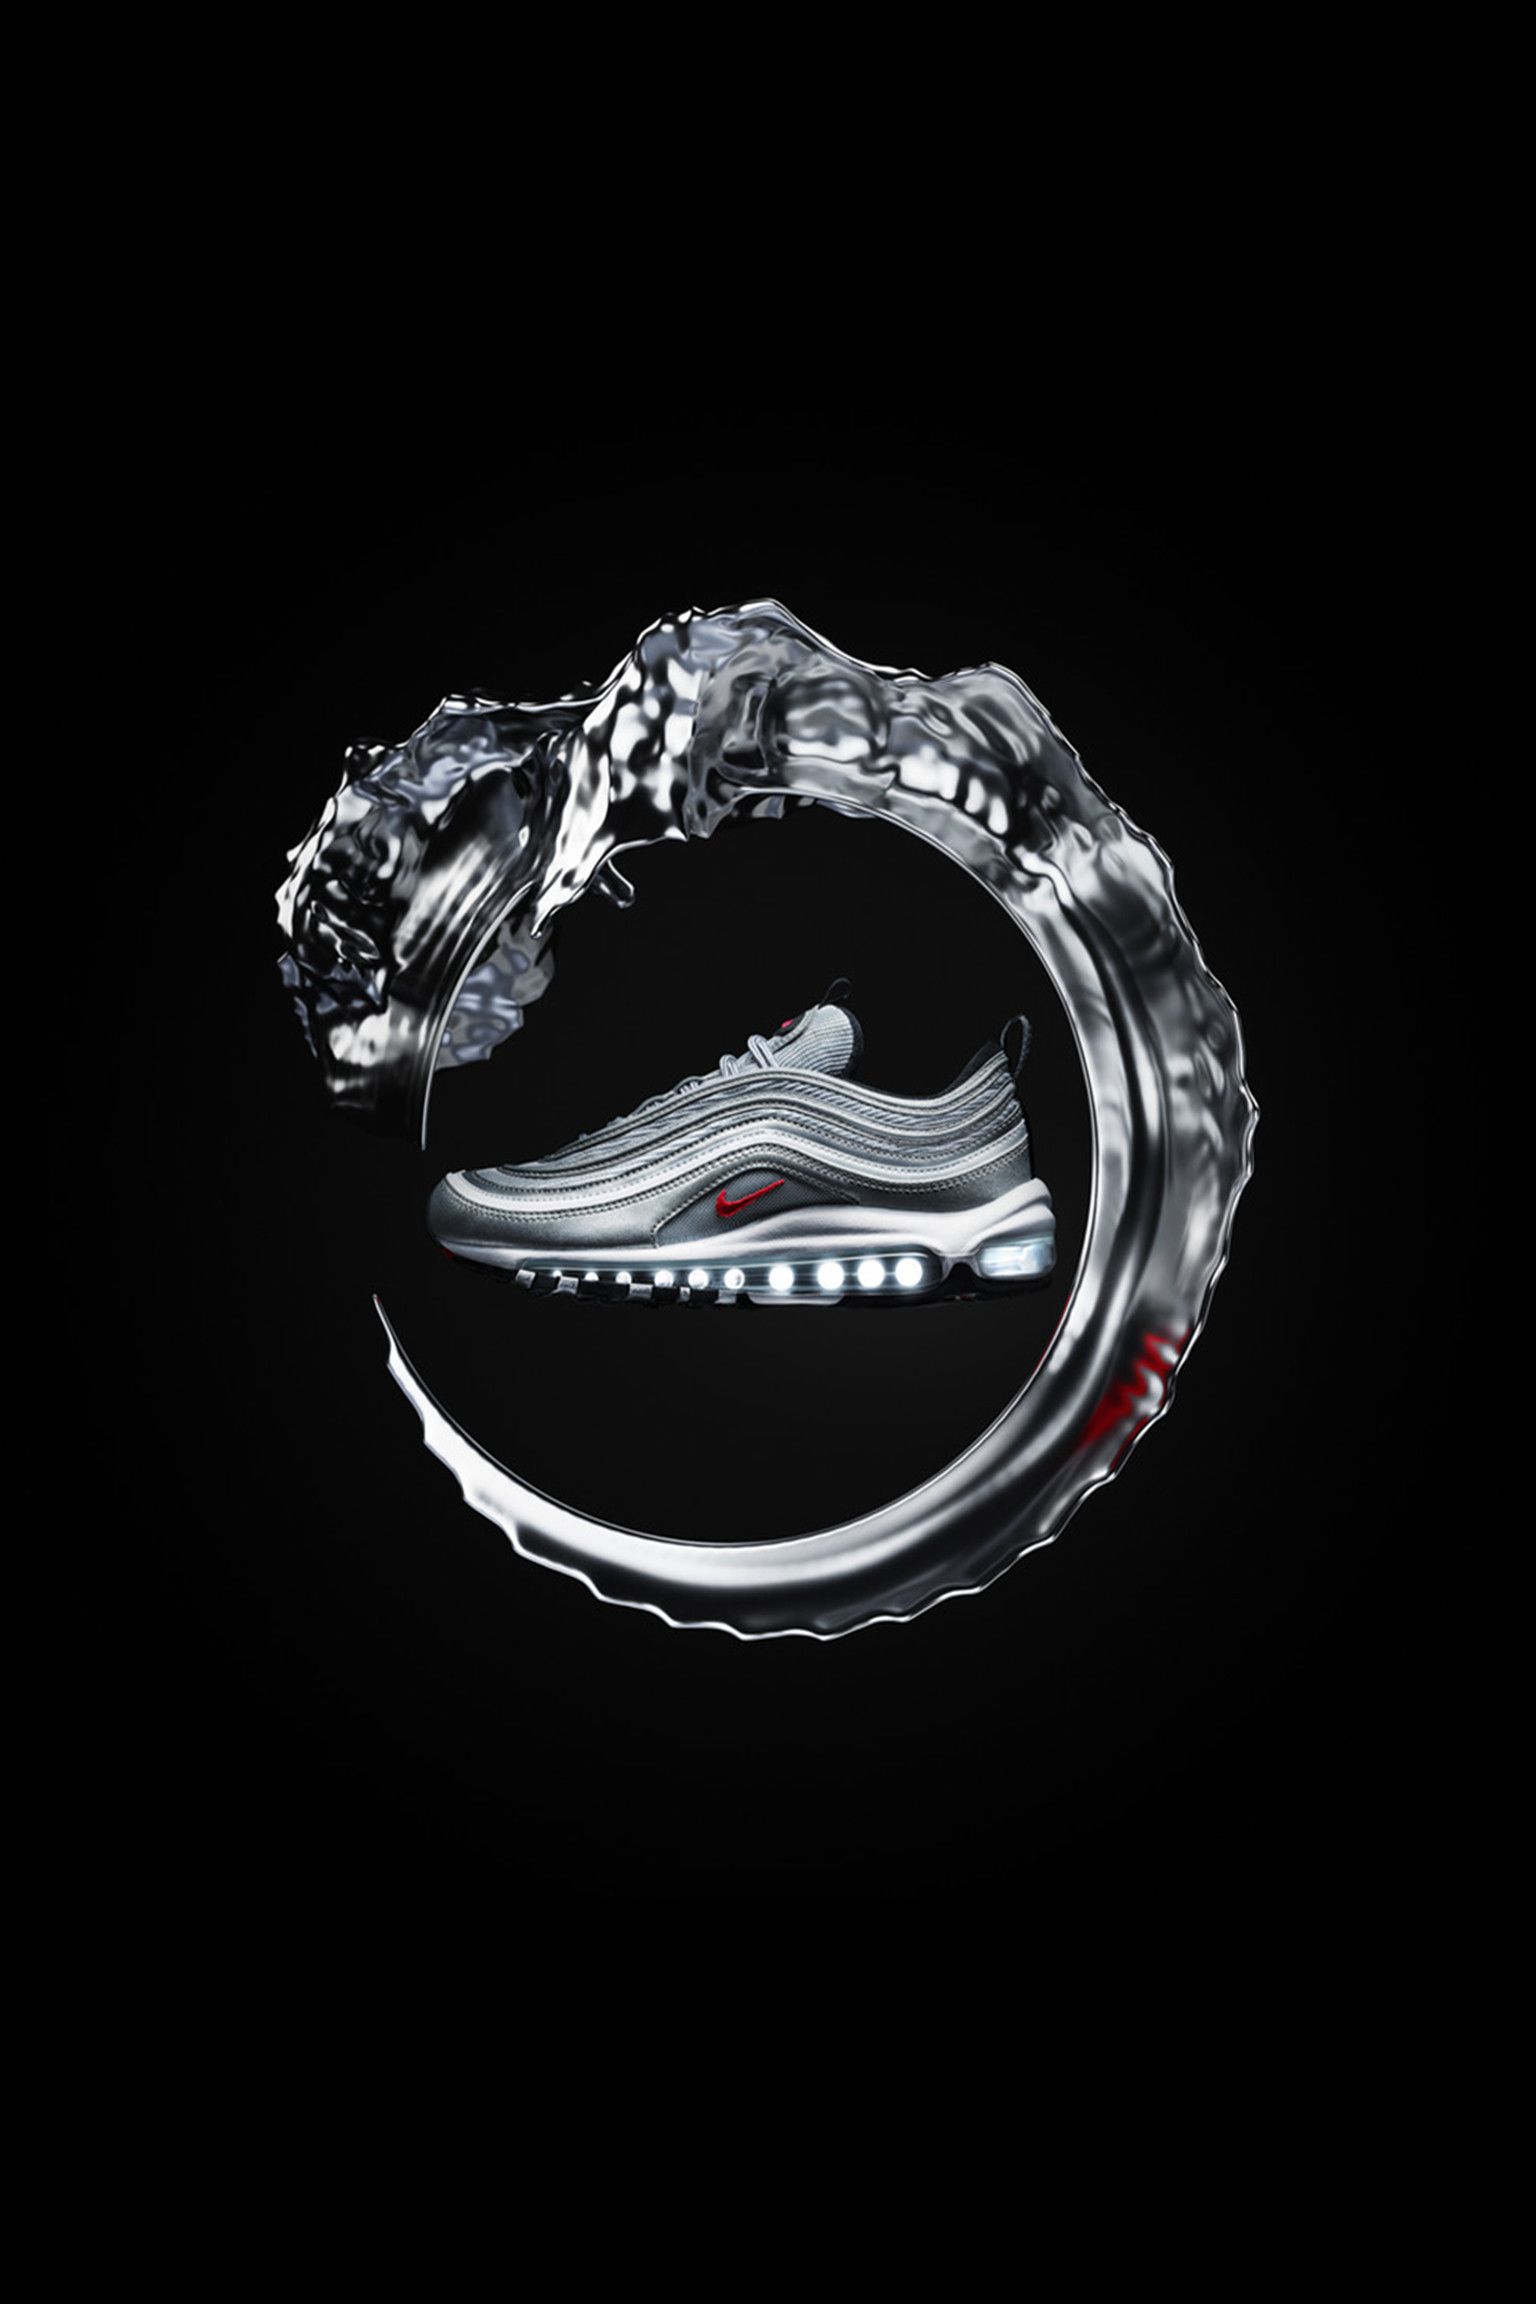 miércoles erección Jabeth Wilson Nike Air Max 97 OG "Metallic Silver". Nike SNKRS ES